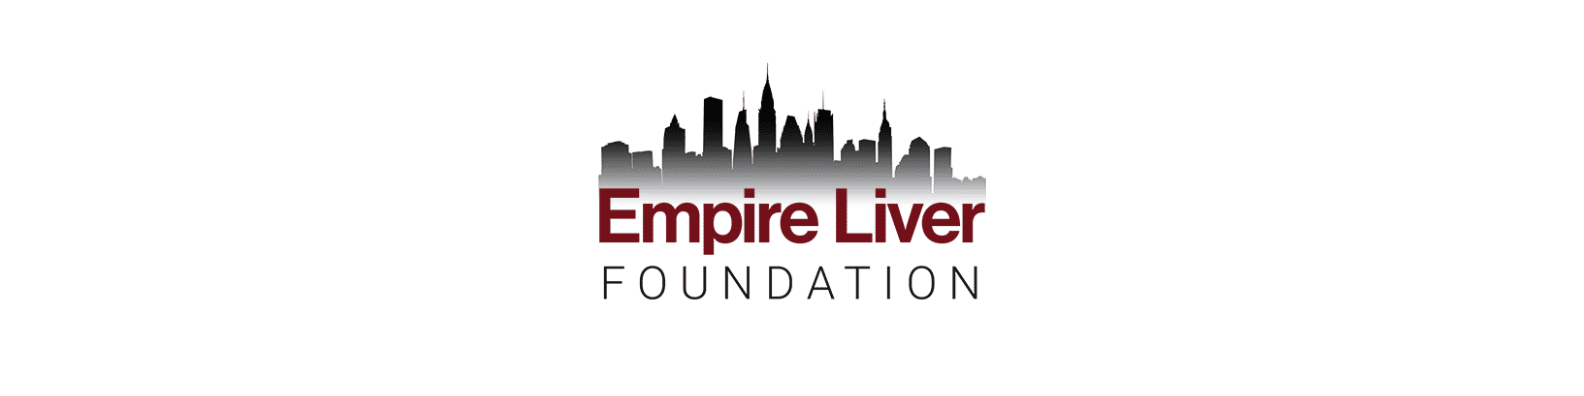 Empire Liver Foundation Banner